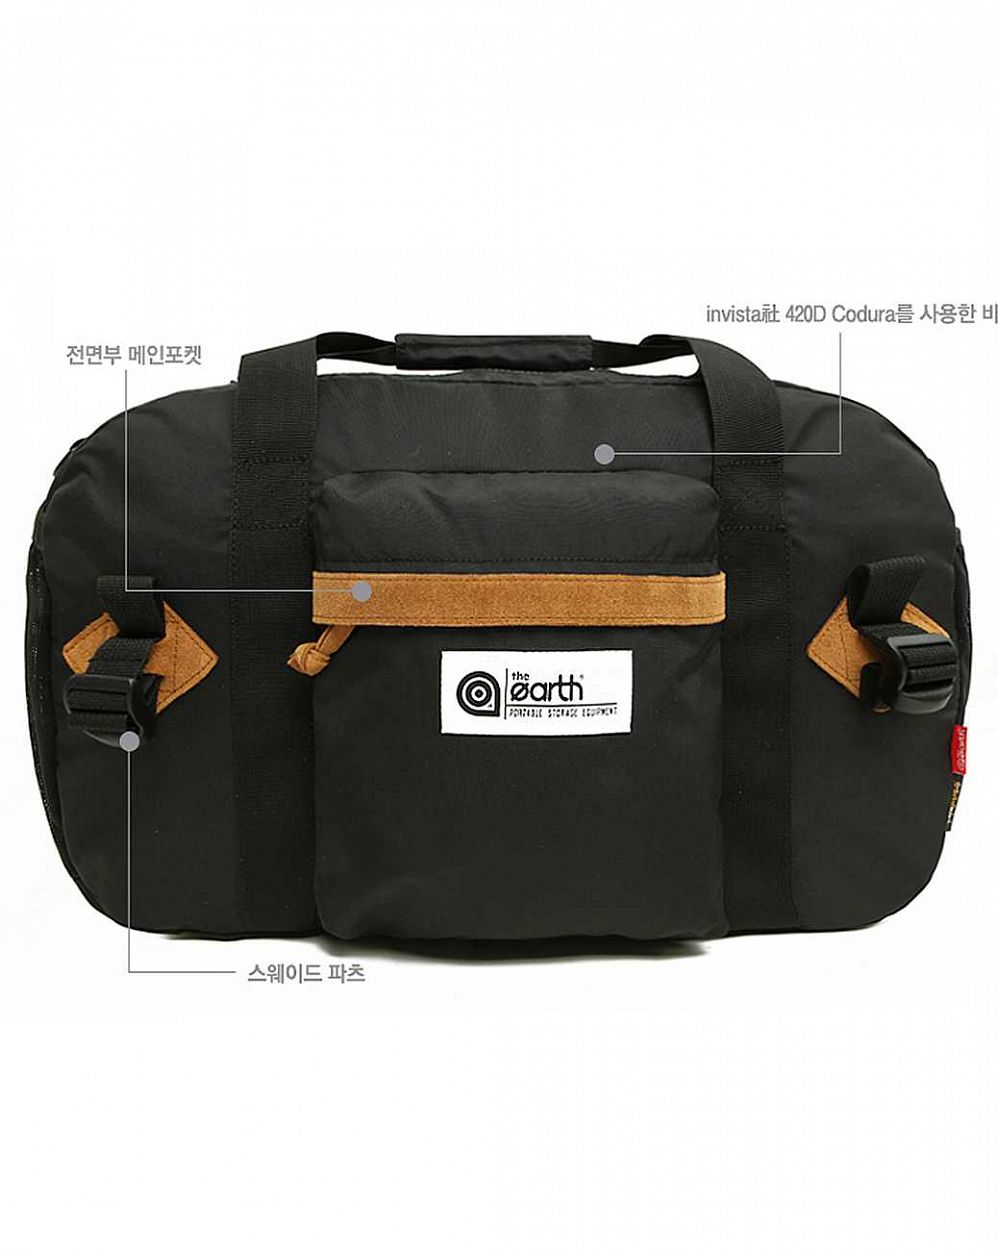 Сумка The earth Company Outdoor 13L Travel Bag black отзывы